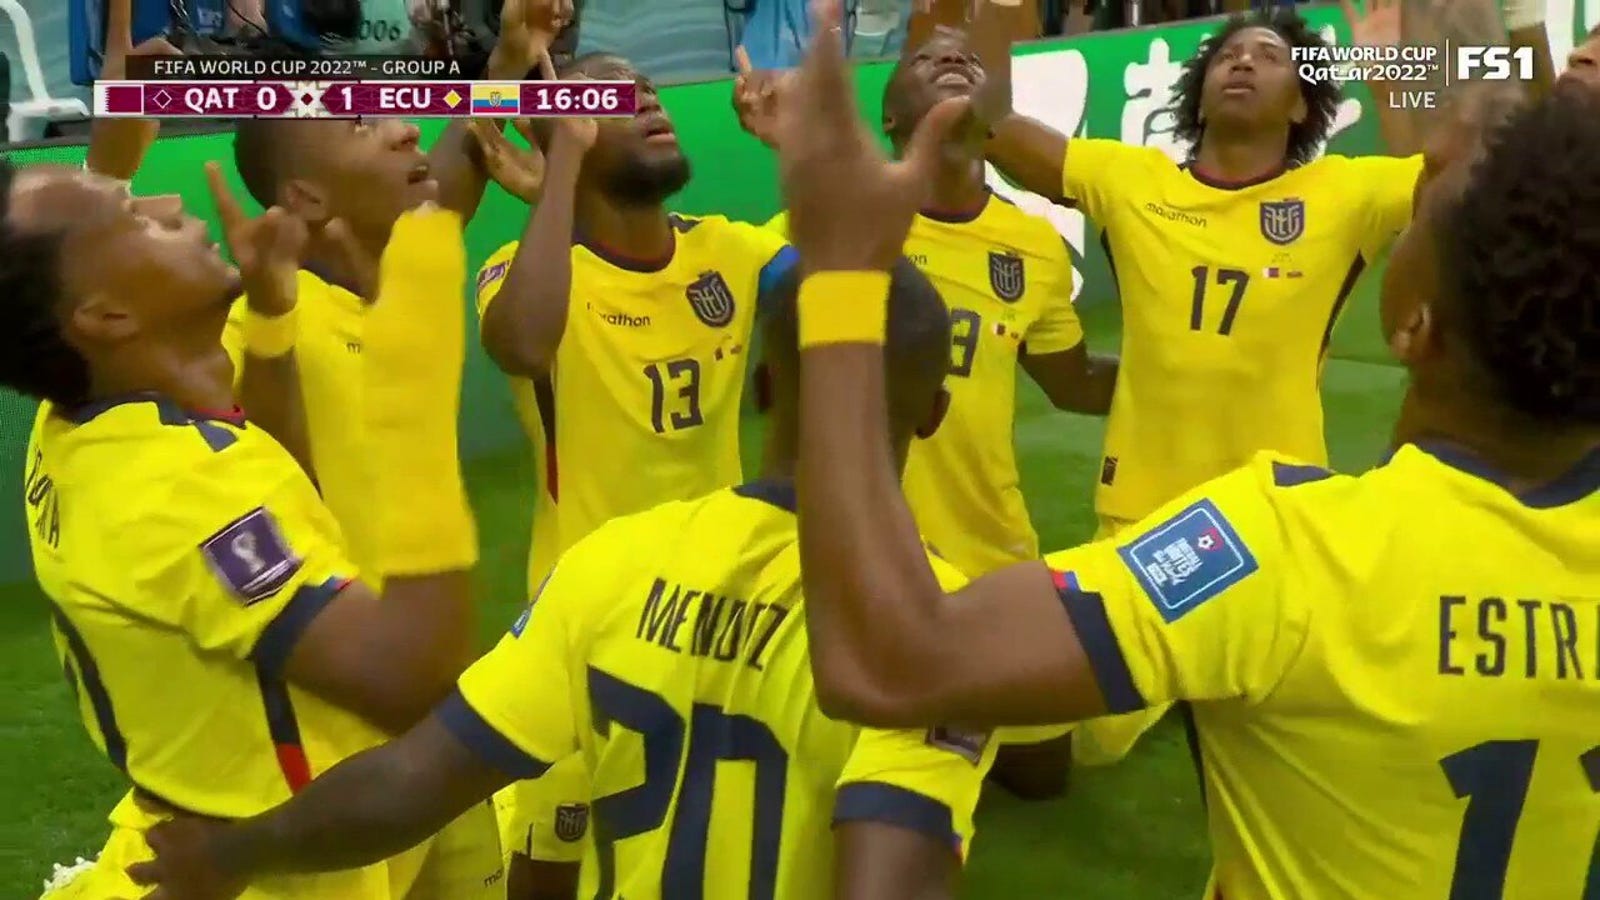 Ecuador's Ener Valencia scores a goal against Qatar in the 15th minute  World Cup 2022